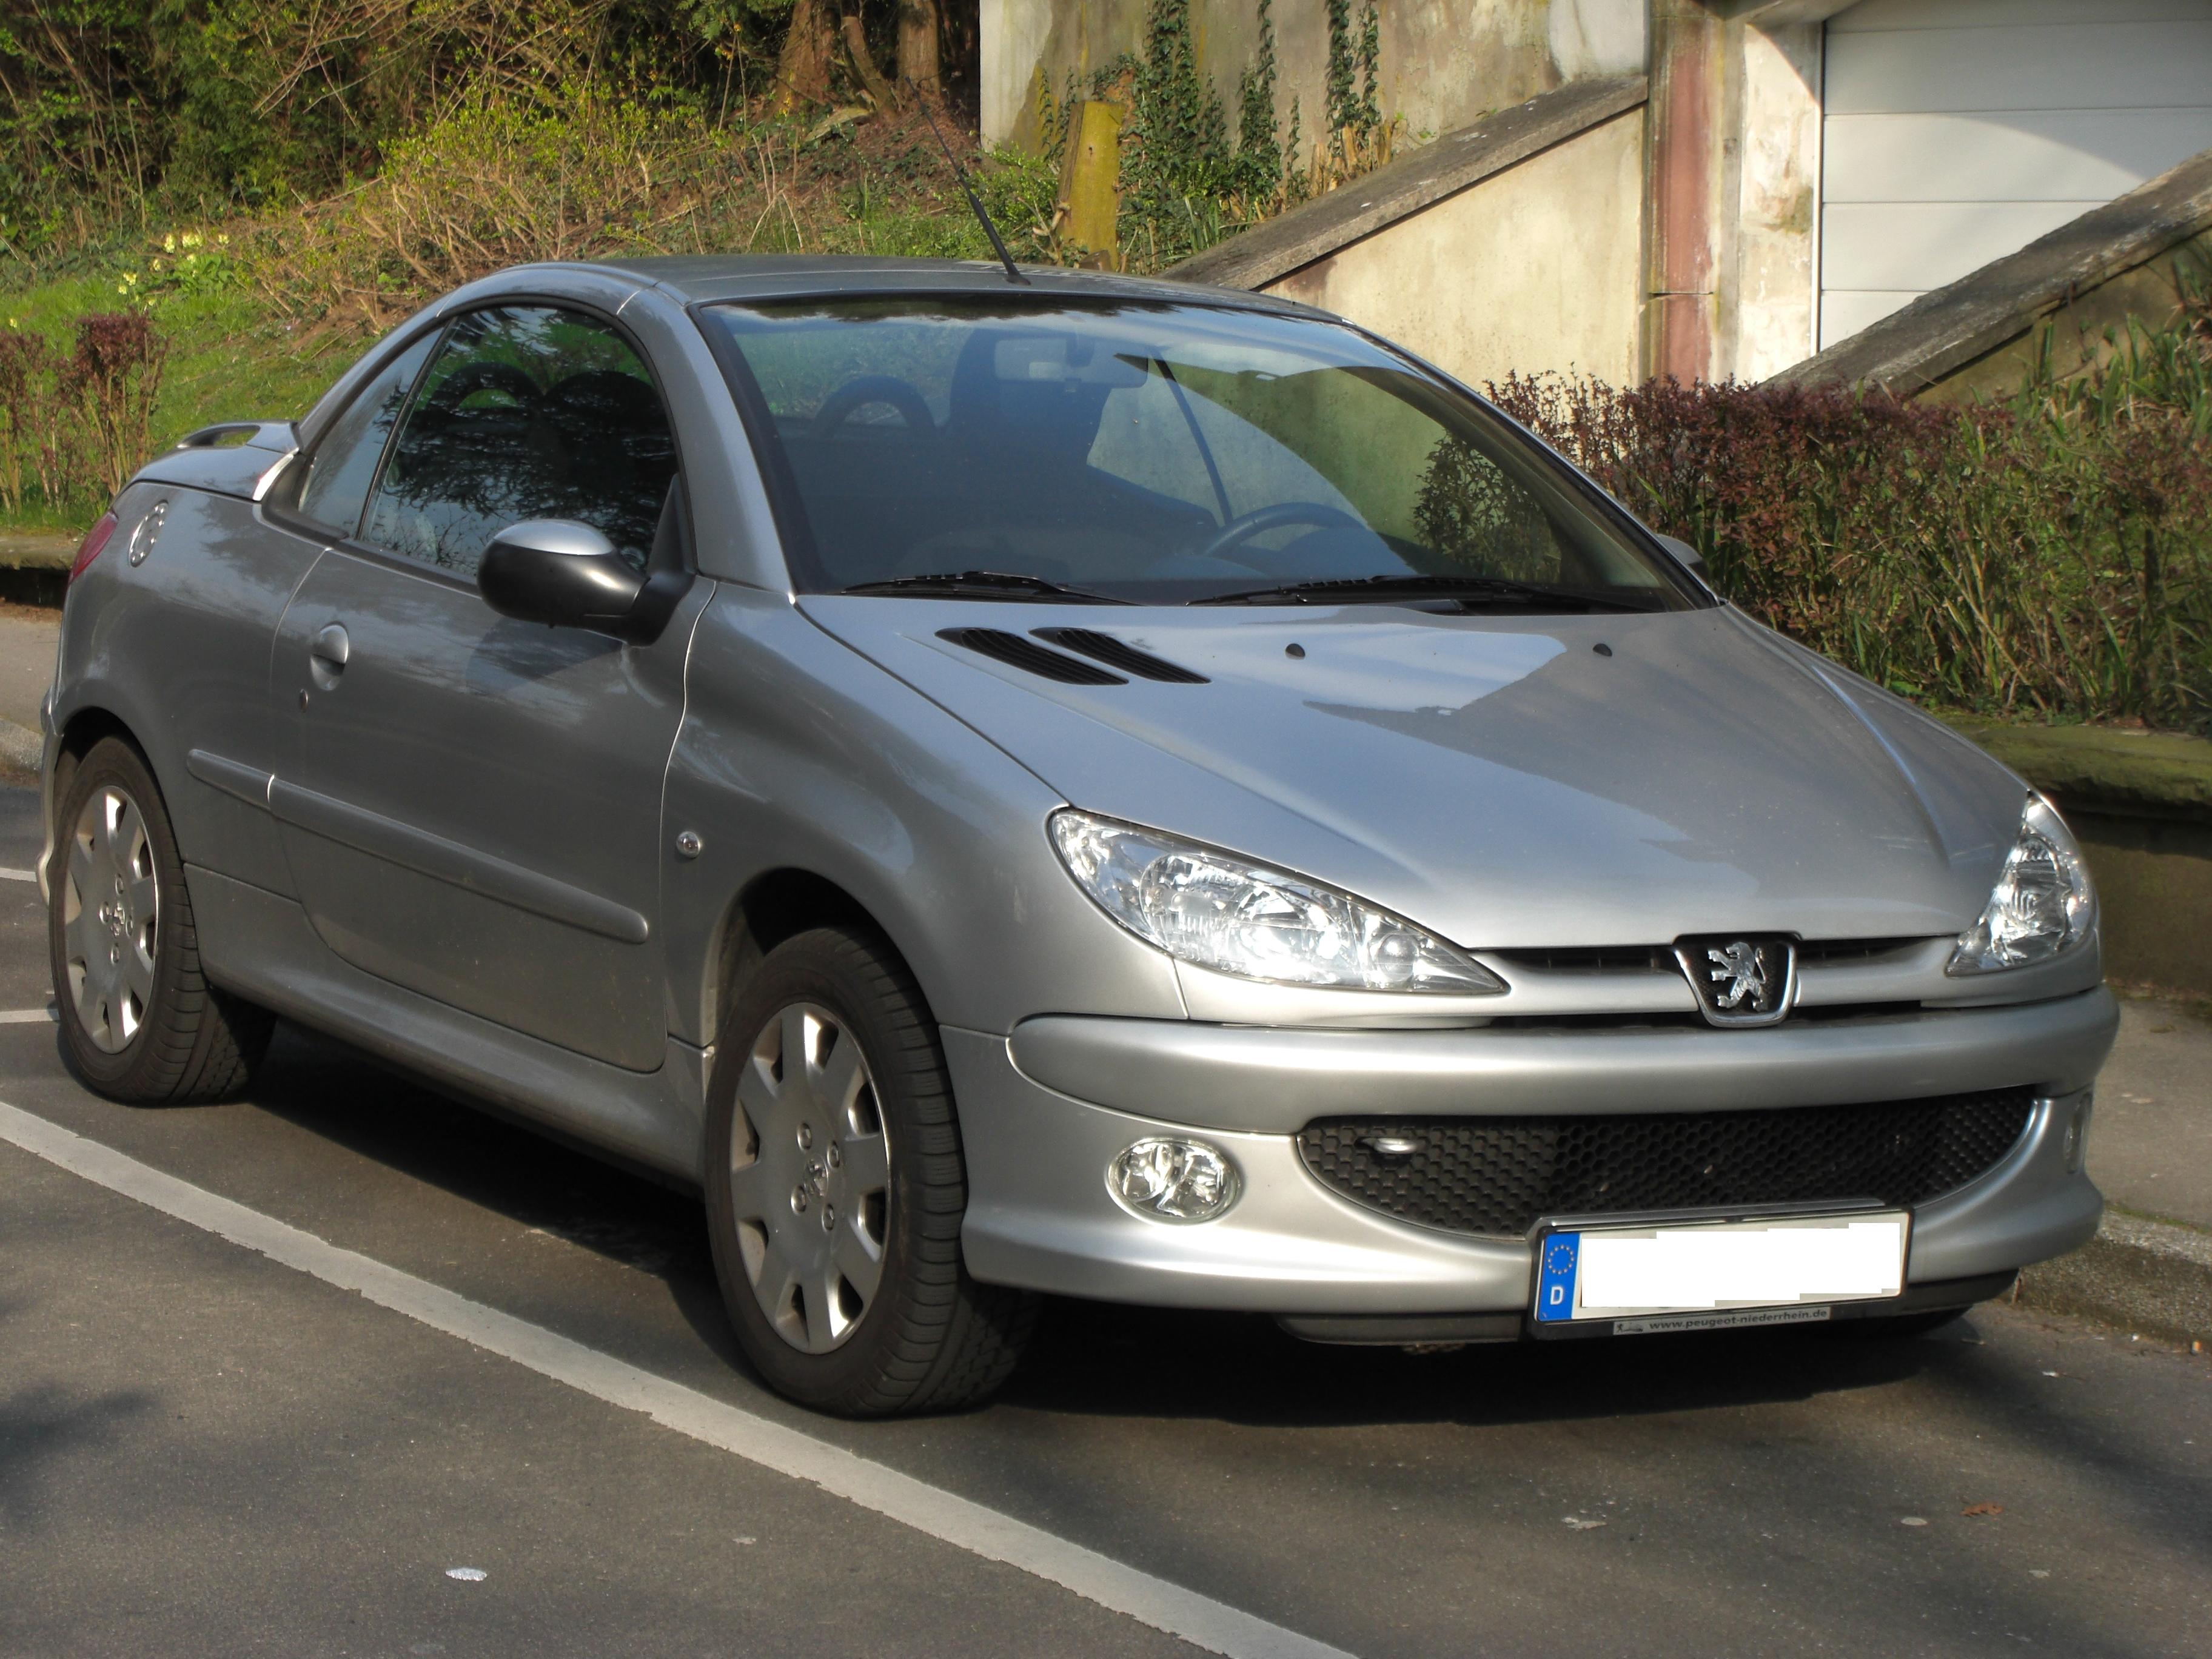 File:Peugeot 206CC front.jpg - Wikimedia Commons